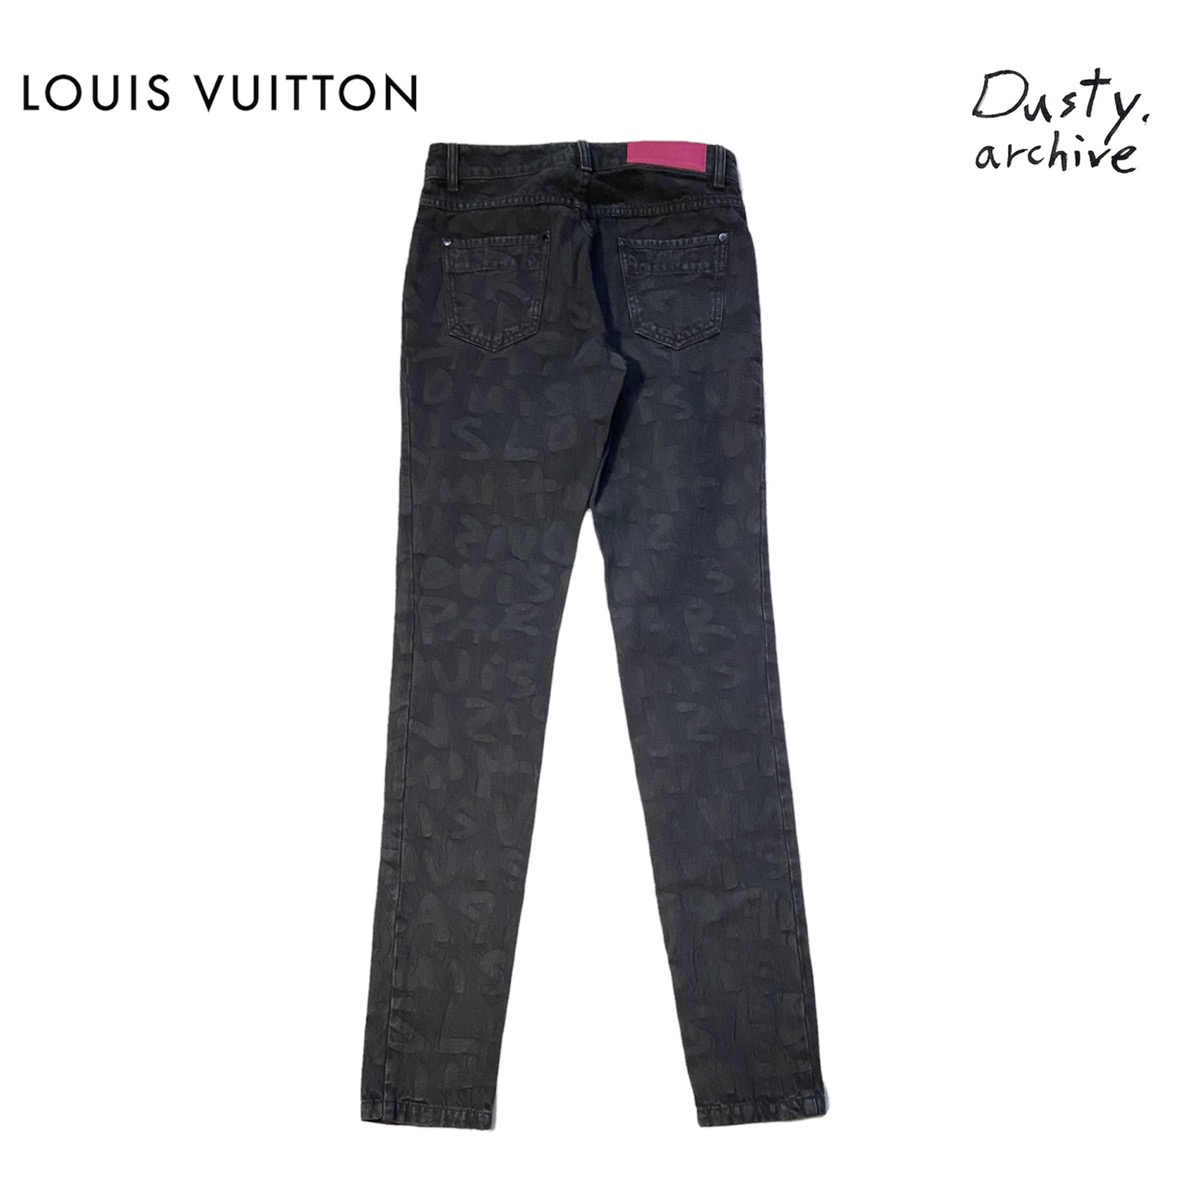 Louis Vuitton, Jeans, Louis Vuitton Stephen Sprouse Black Graffiti Logo  Jeans